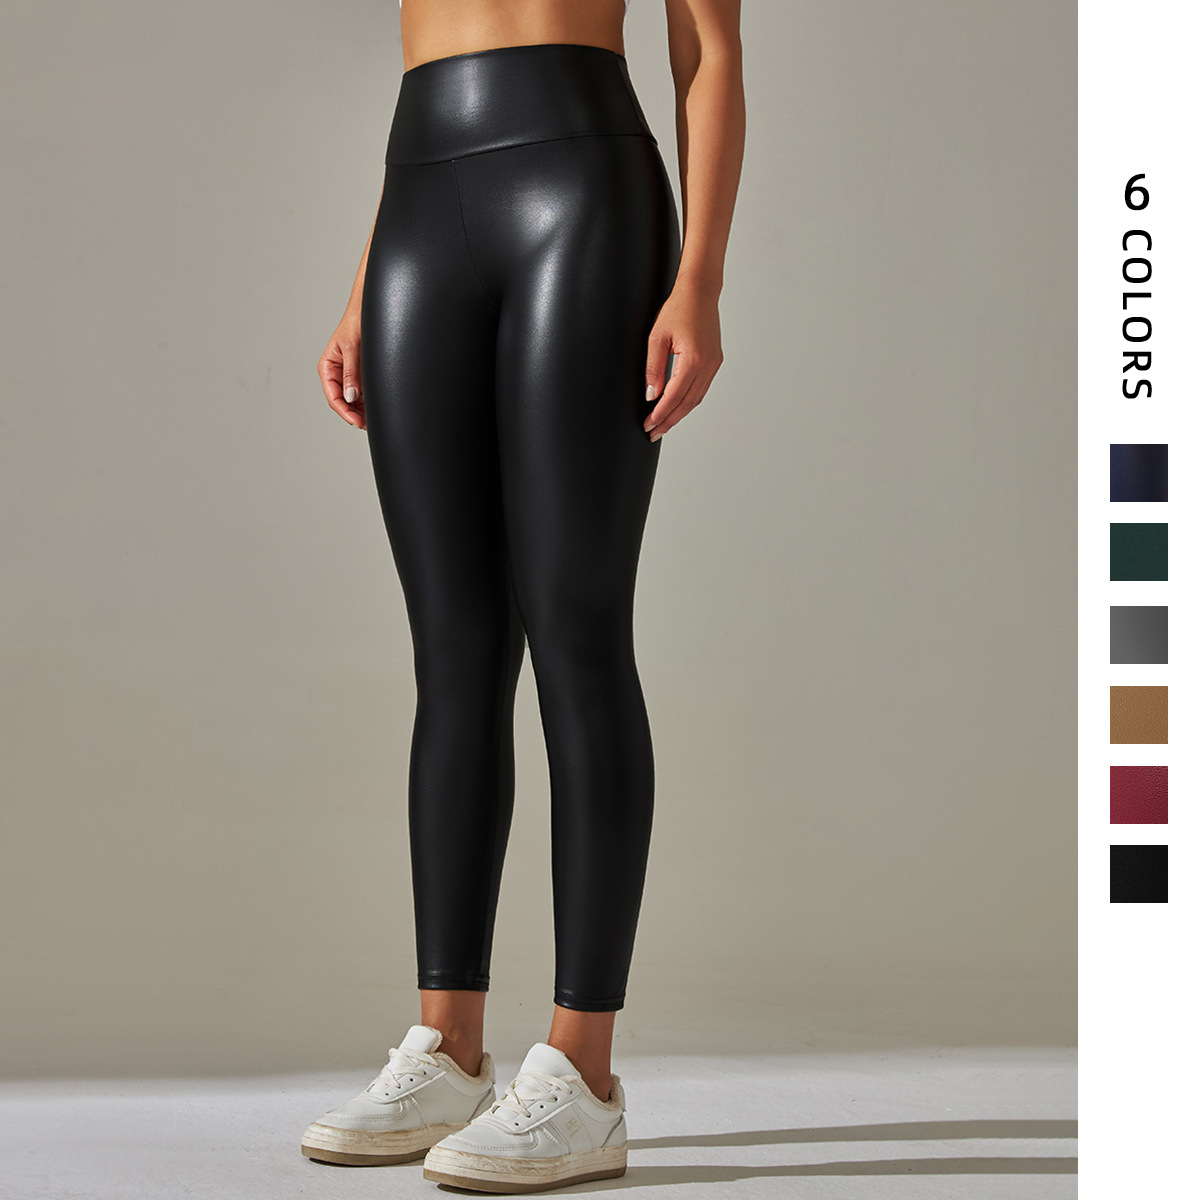 PU Leather Leggings Sexy 6 Colors Plus Size 5xl Leather Pants Yoga Leggings